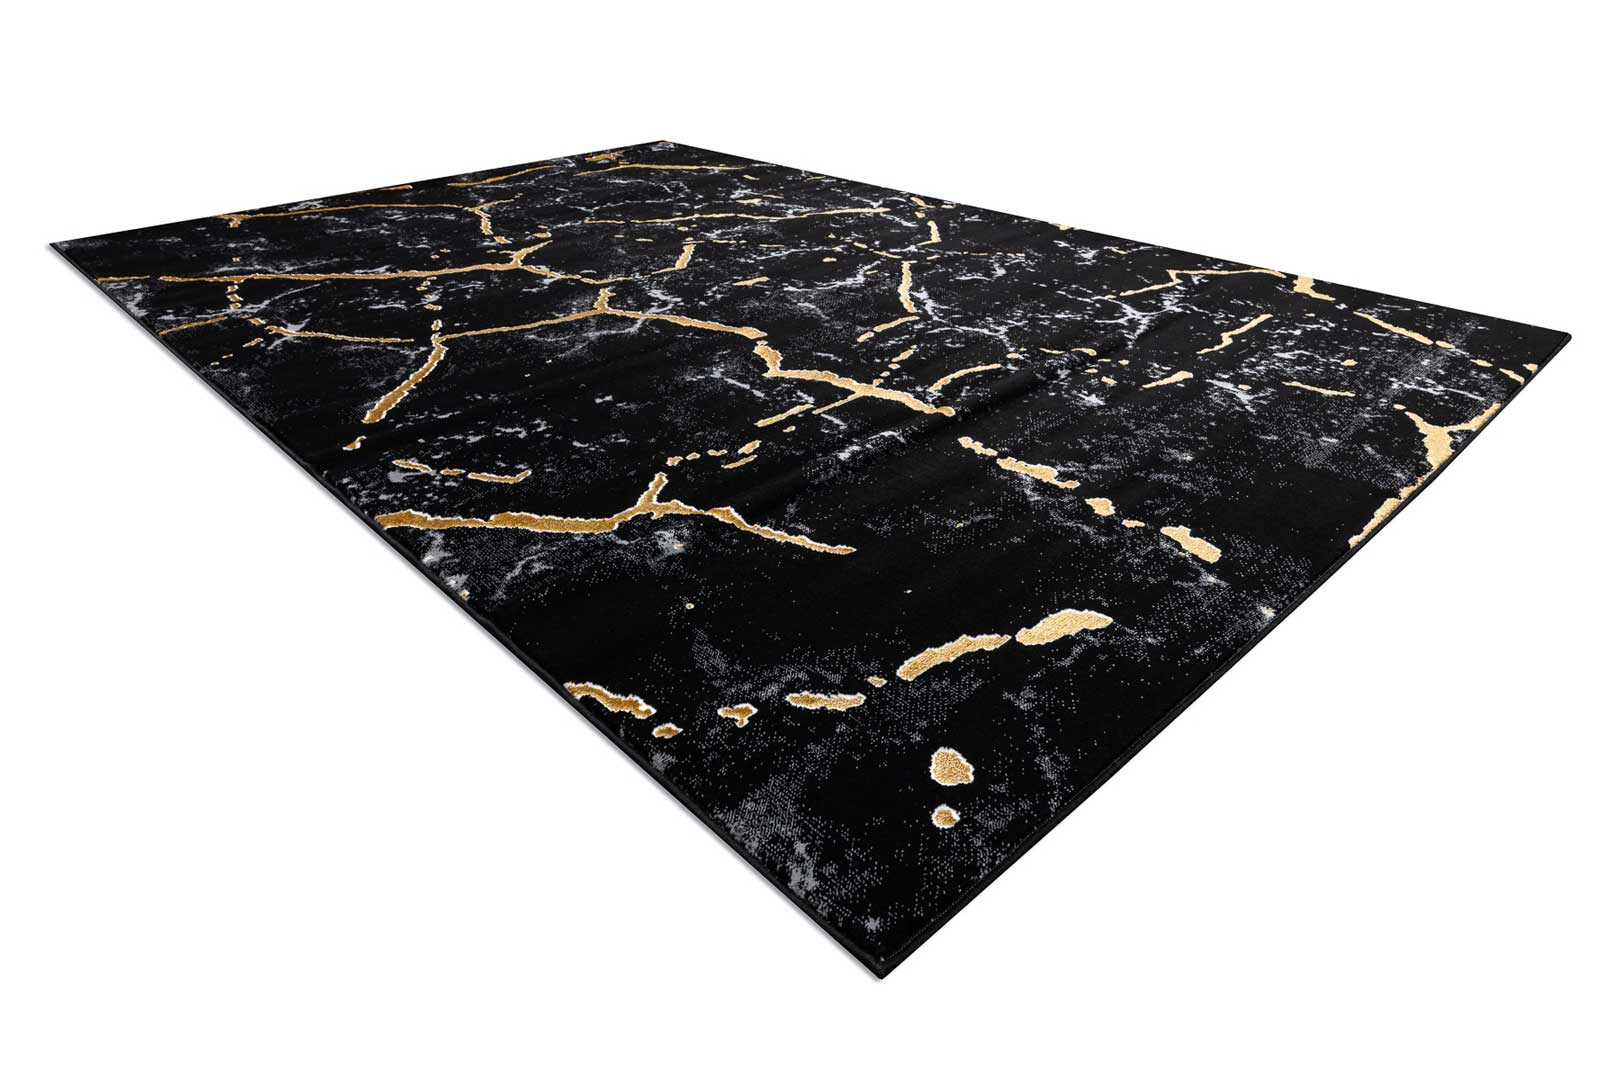 Kameň imitujúci syntetický koberec Mramor, glamour, čiernej farby so zlatými puklinami - Dywany Łuszczów obrázok 3